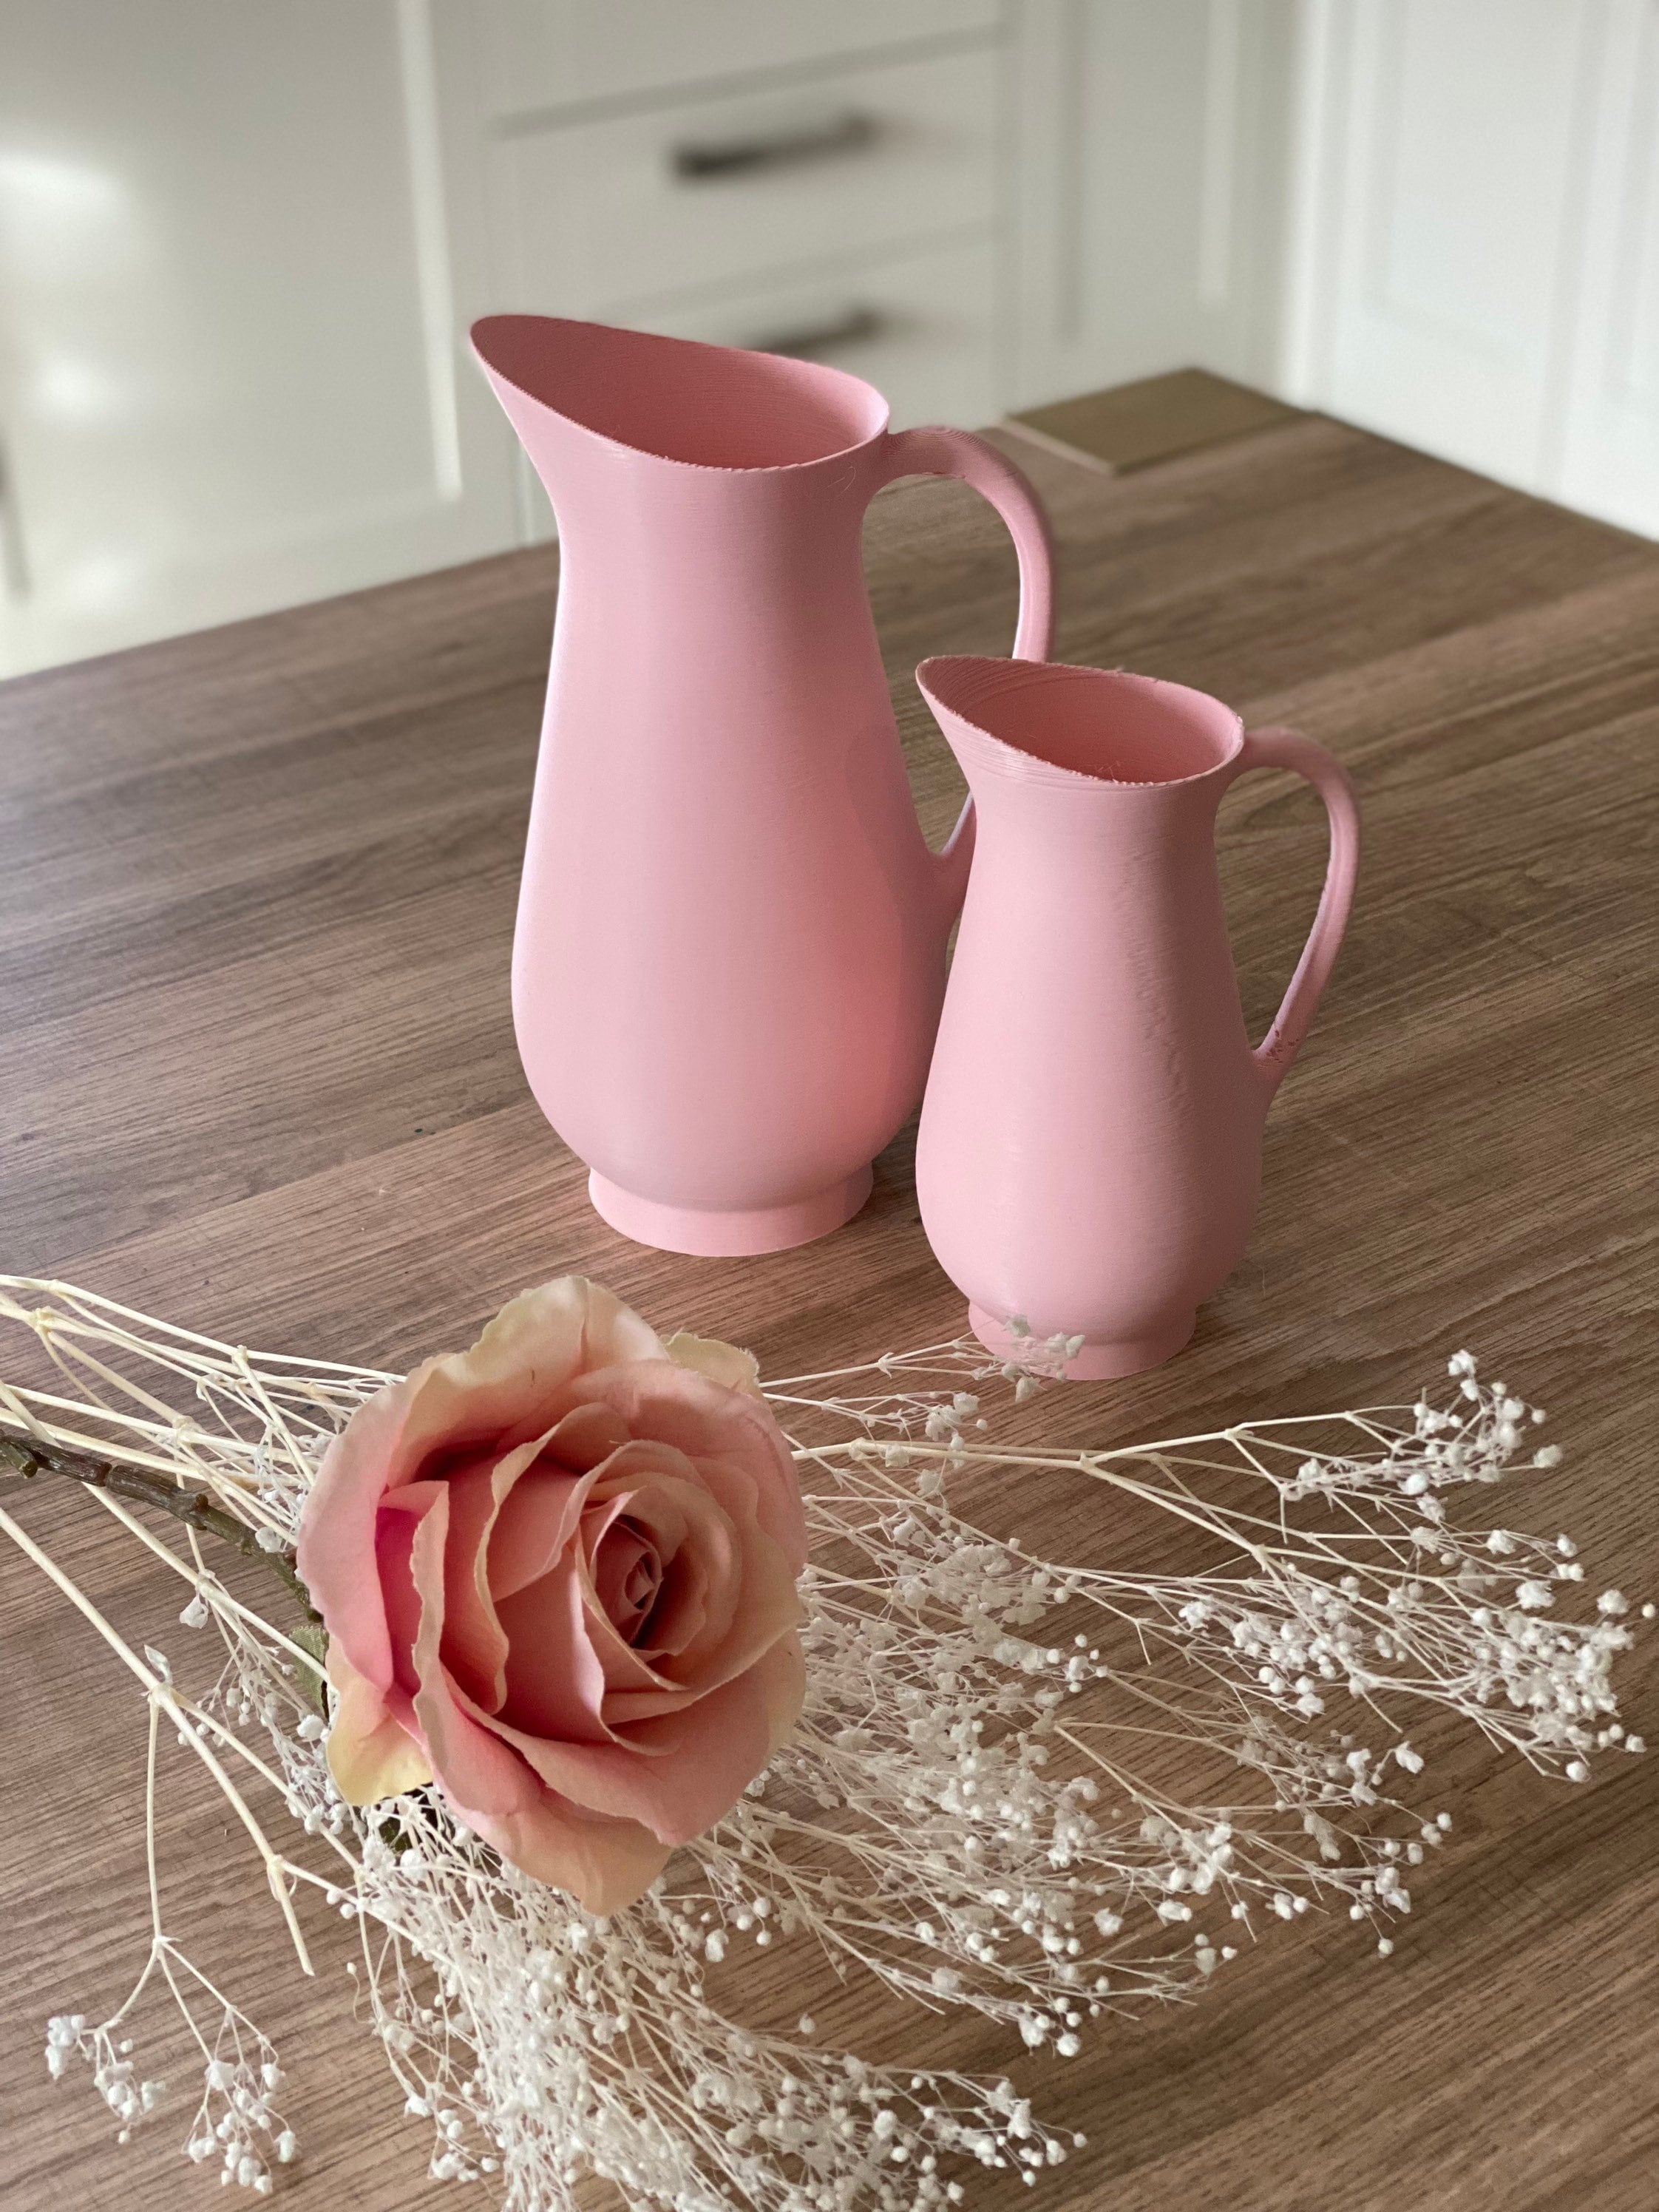 Water FSL Ceramic Jug Pale Pink Glazed Large with Handle Pitcher Flowers Milk Juice 